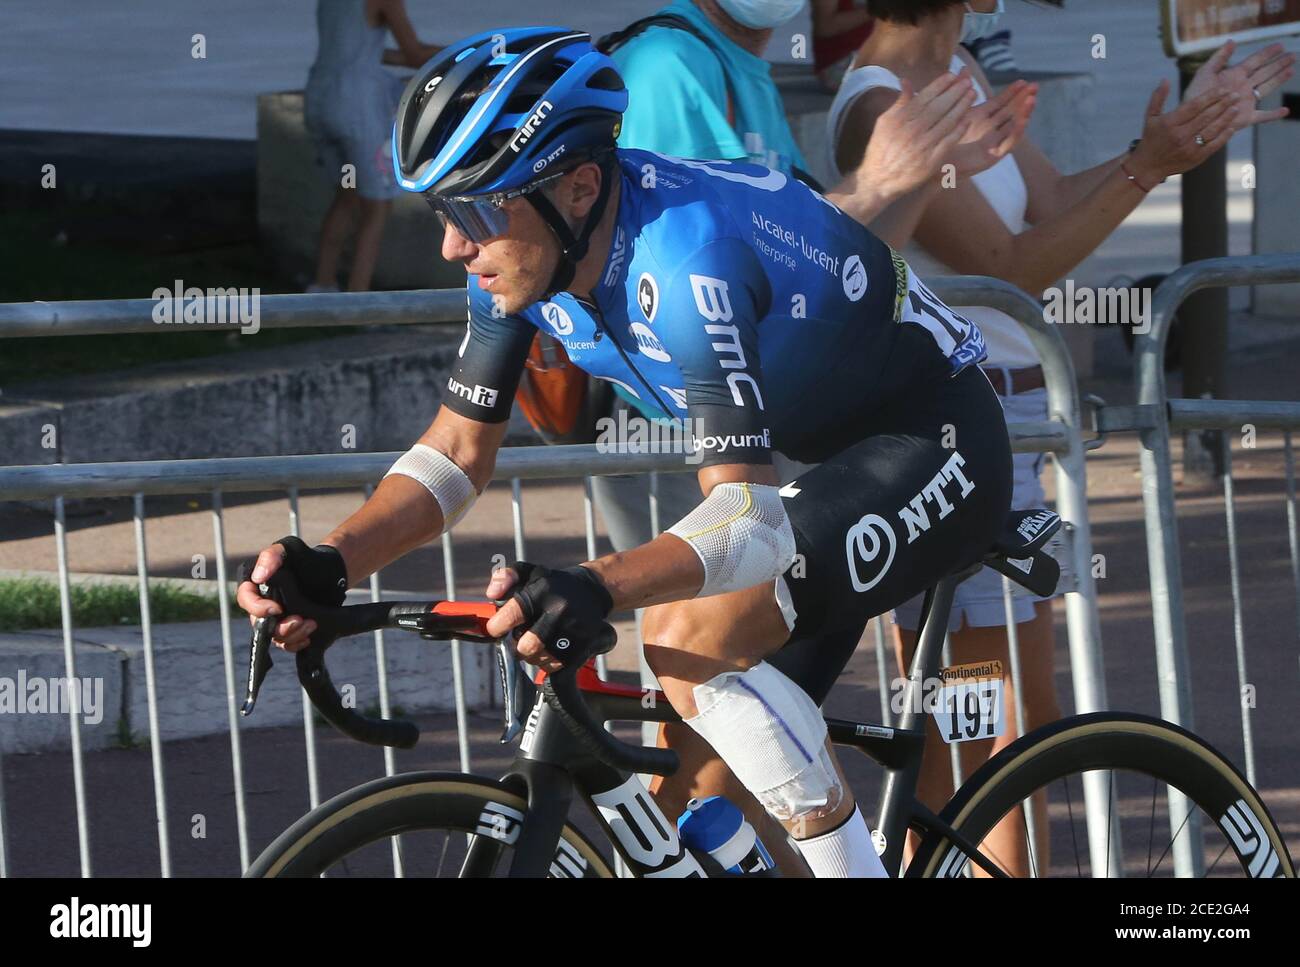 Domenico Pozzovivo of NTT Pro Cycling during the Tour de, France